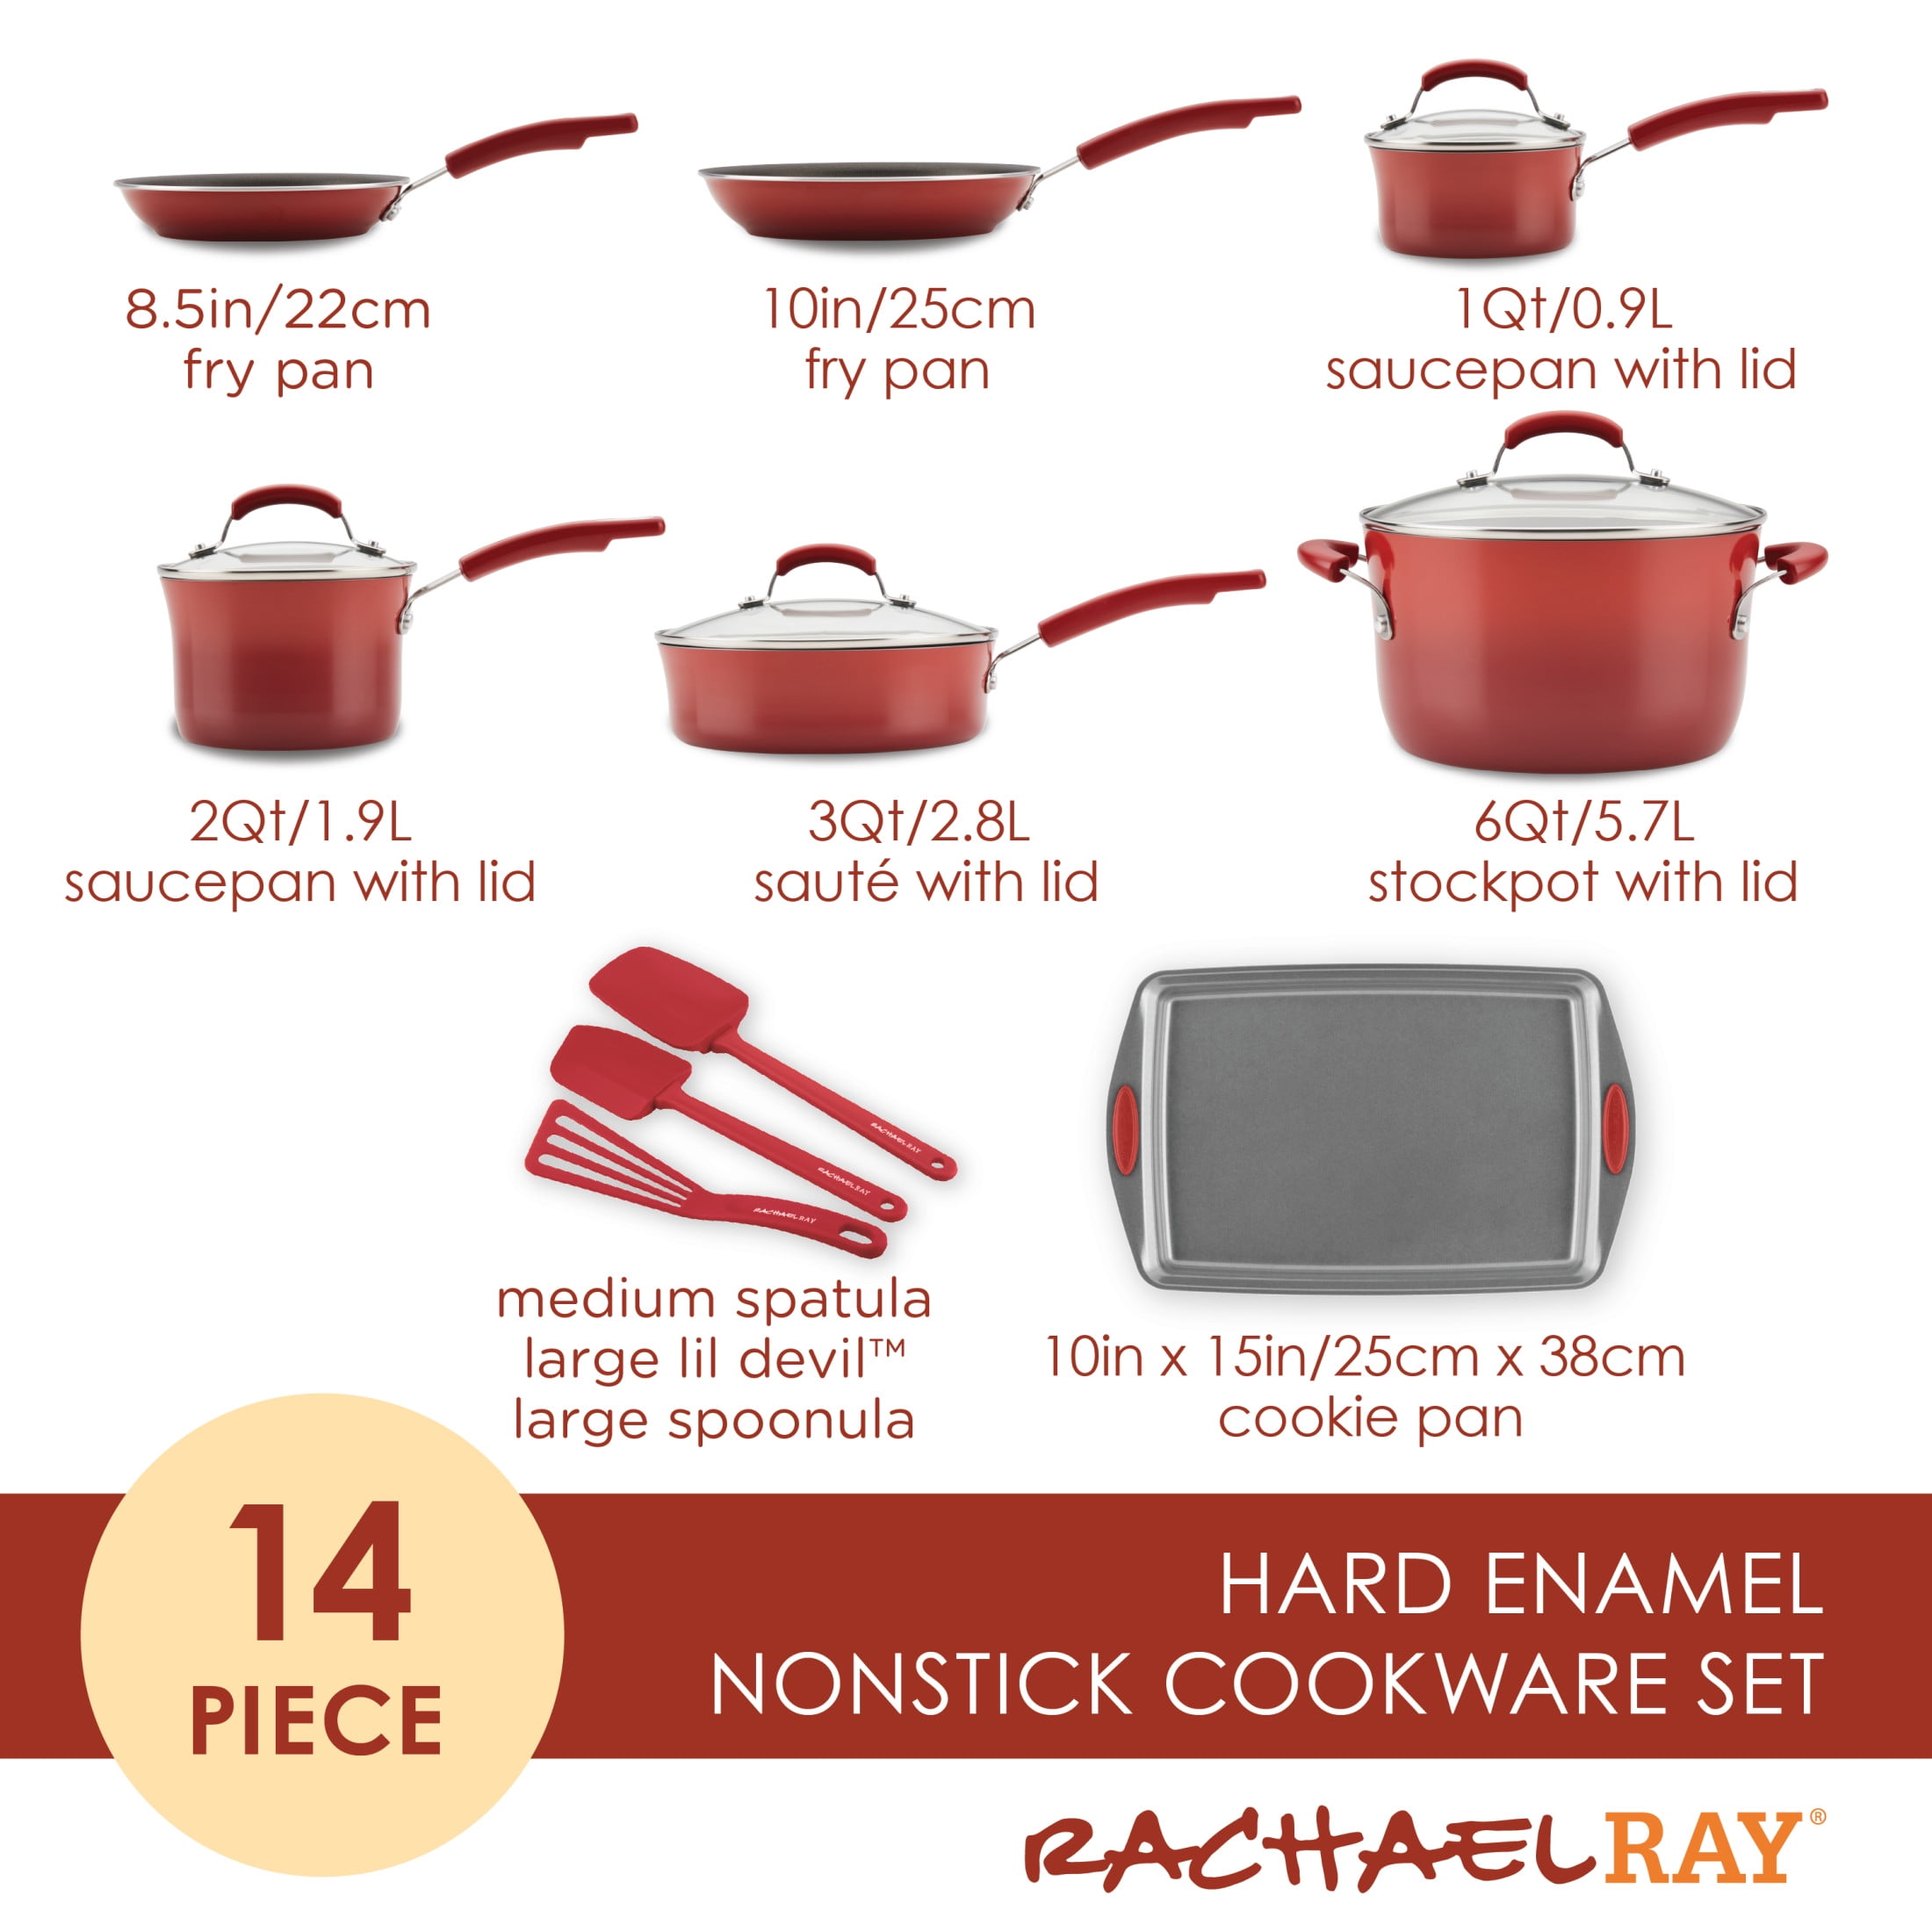 Rachael Ray Hard Enamel Nonstick 14 Piece Cookware Set - The Peppermill